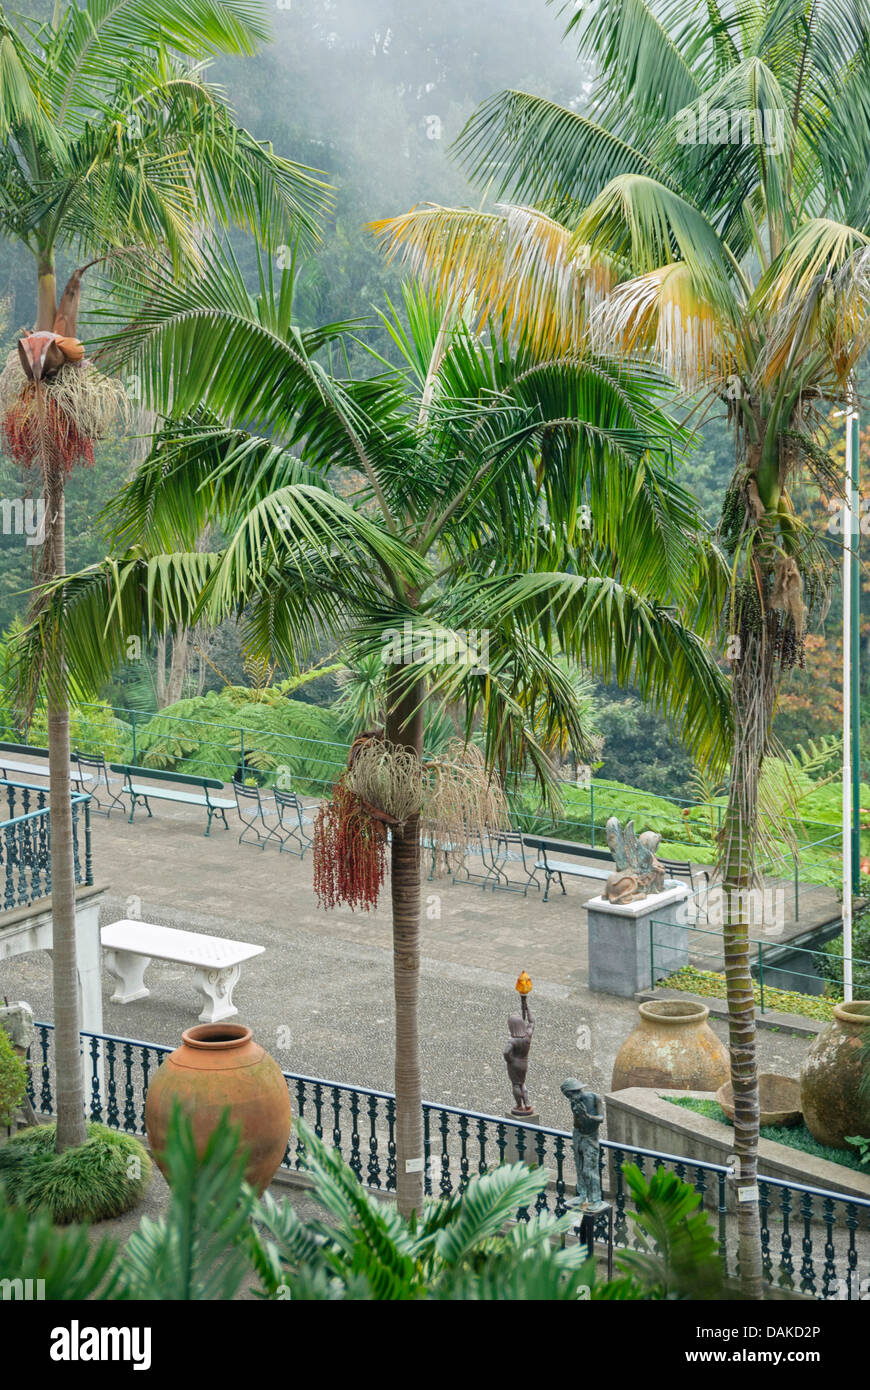 Bangalow palm, King palm, Illawara palm (Archontophoenix cunninghamiana), as a tree tree Stock Photo